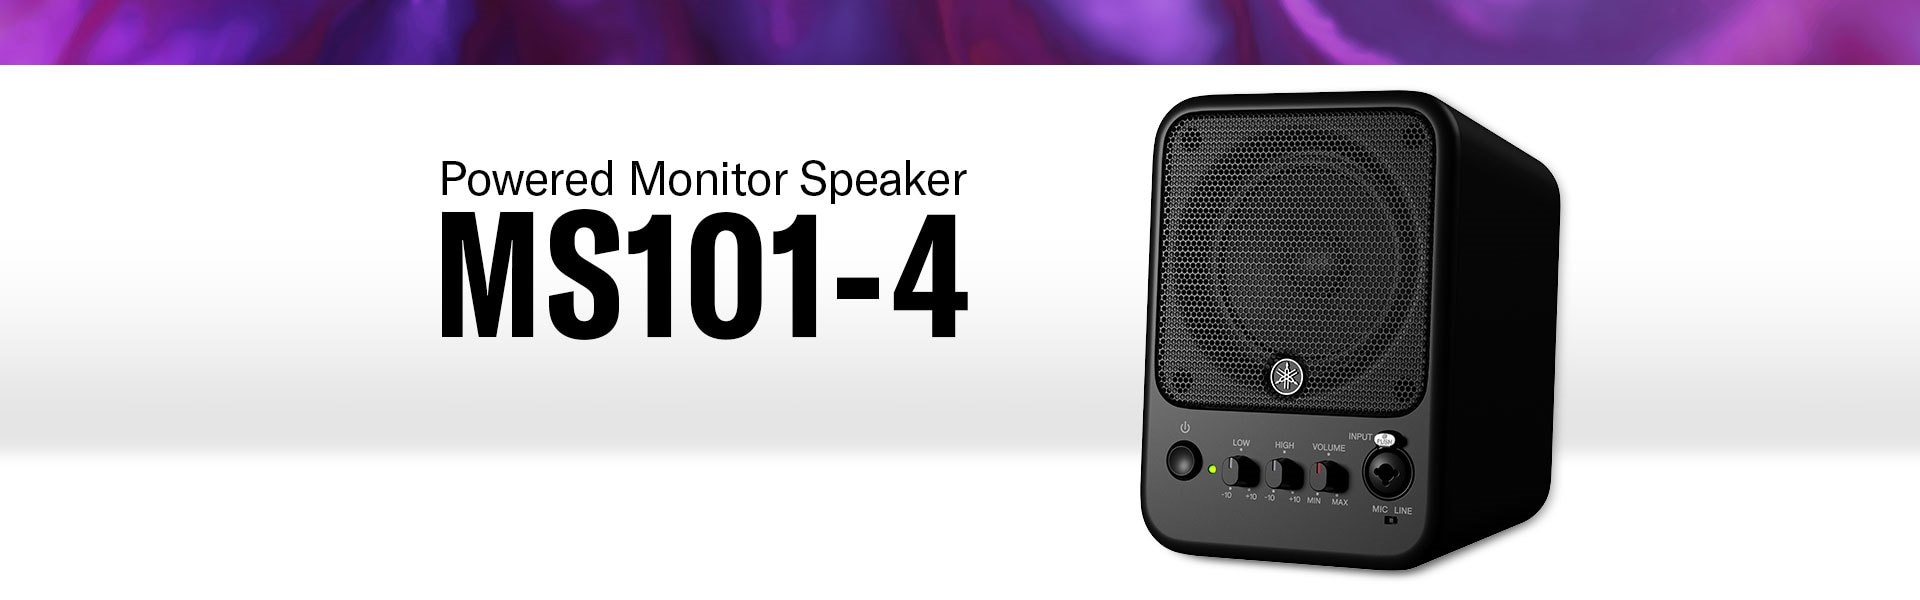 MS101-4 Powered Monitor Speaker - Desktop